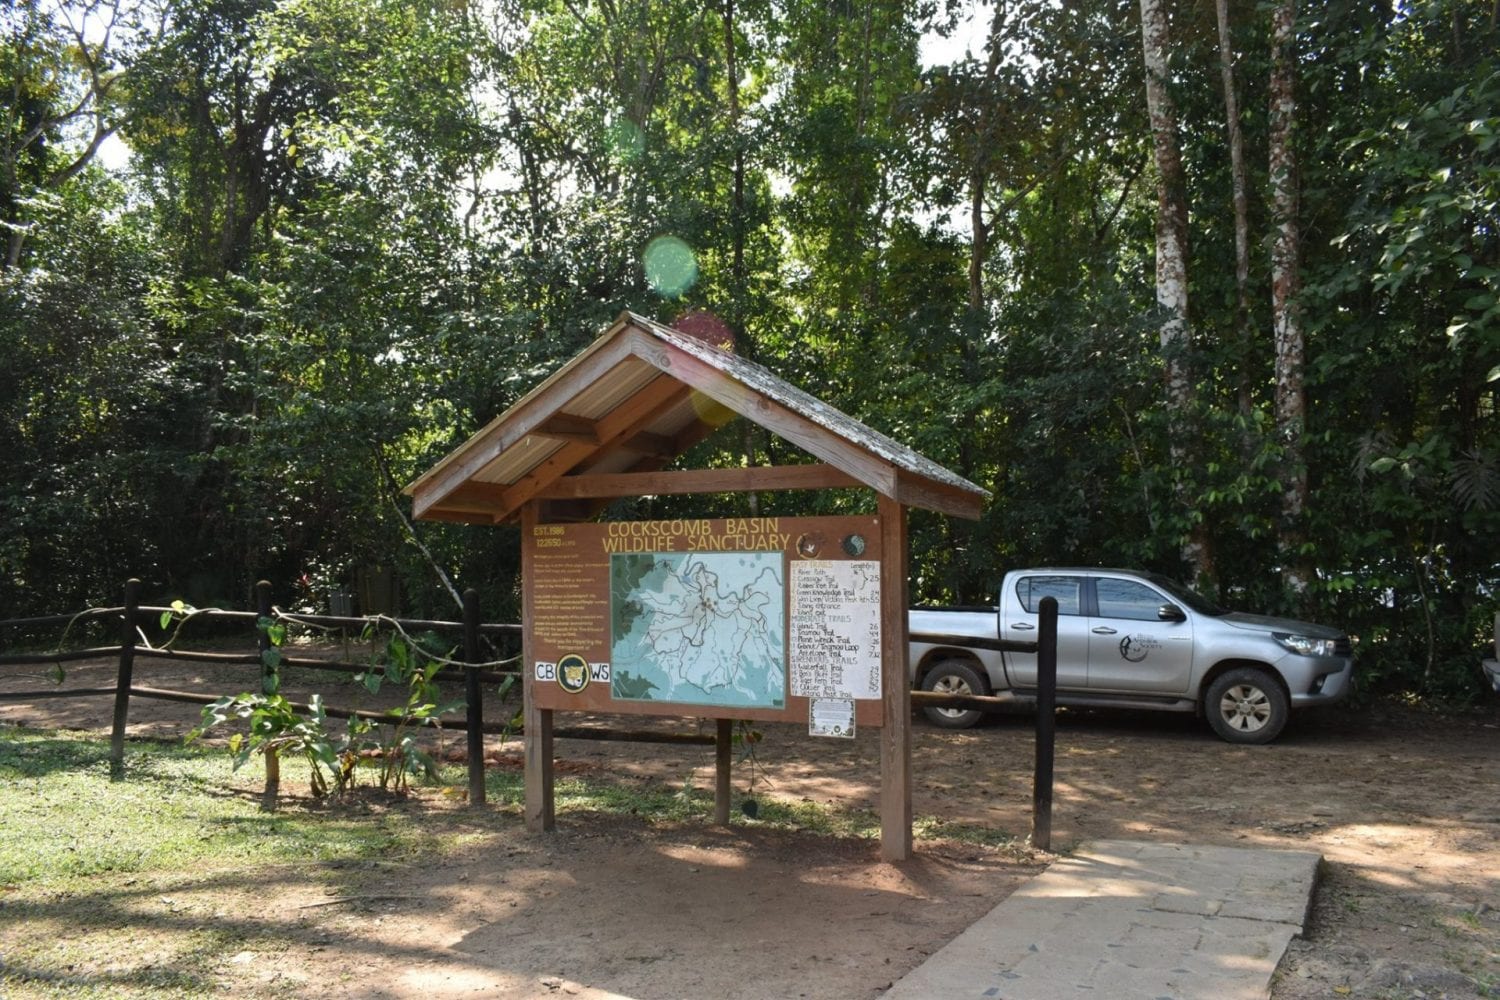 the cockscomb basin wildlife sanctuary